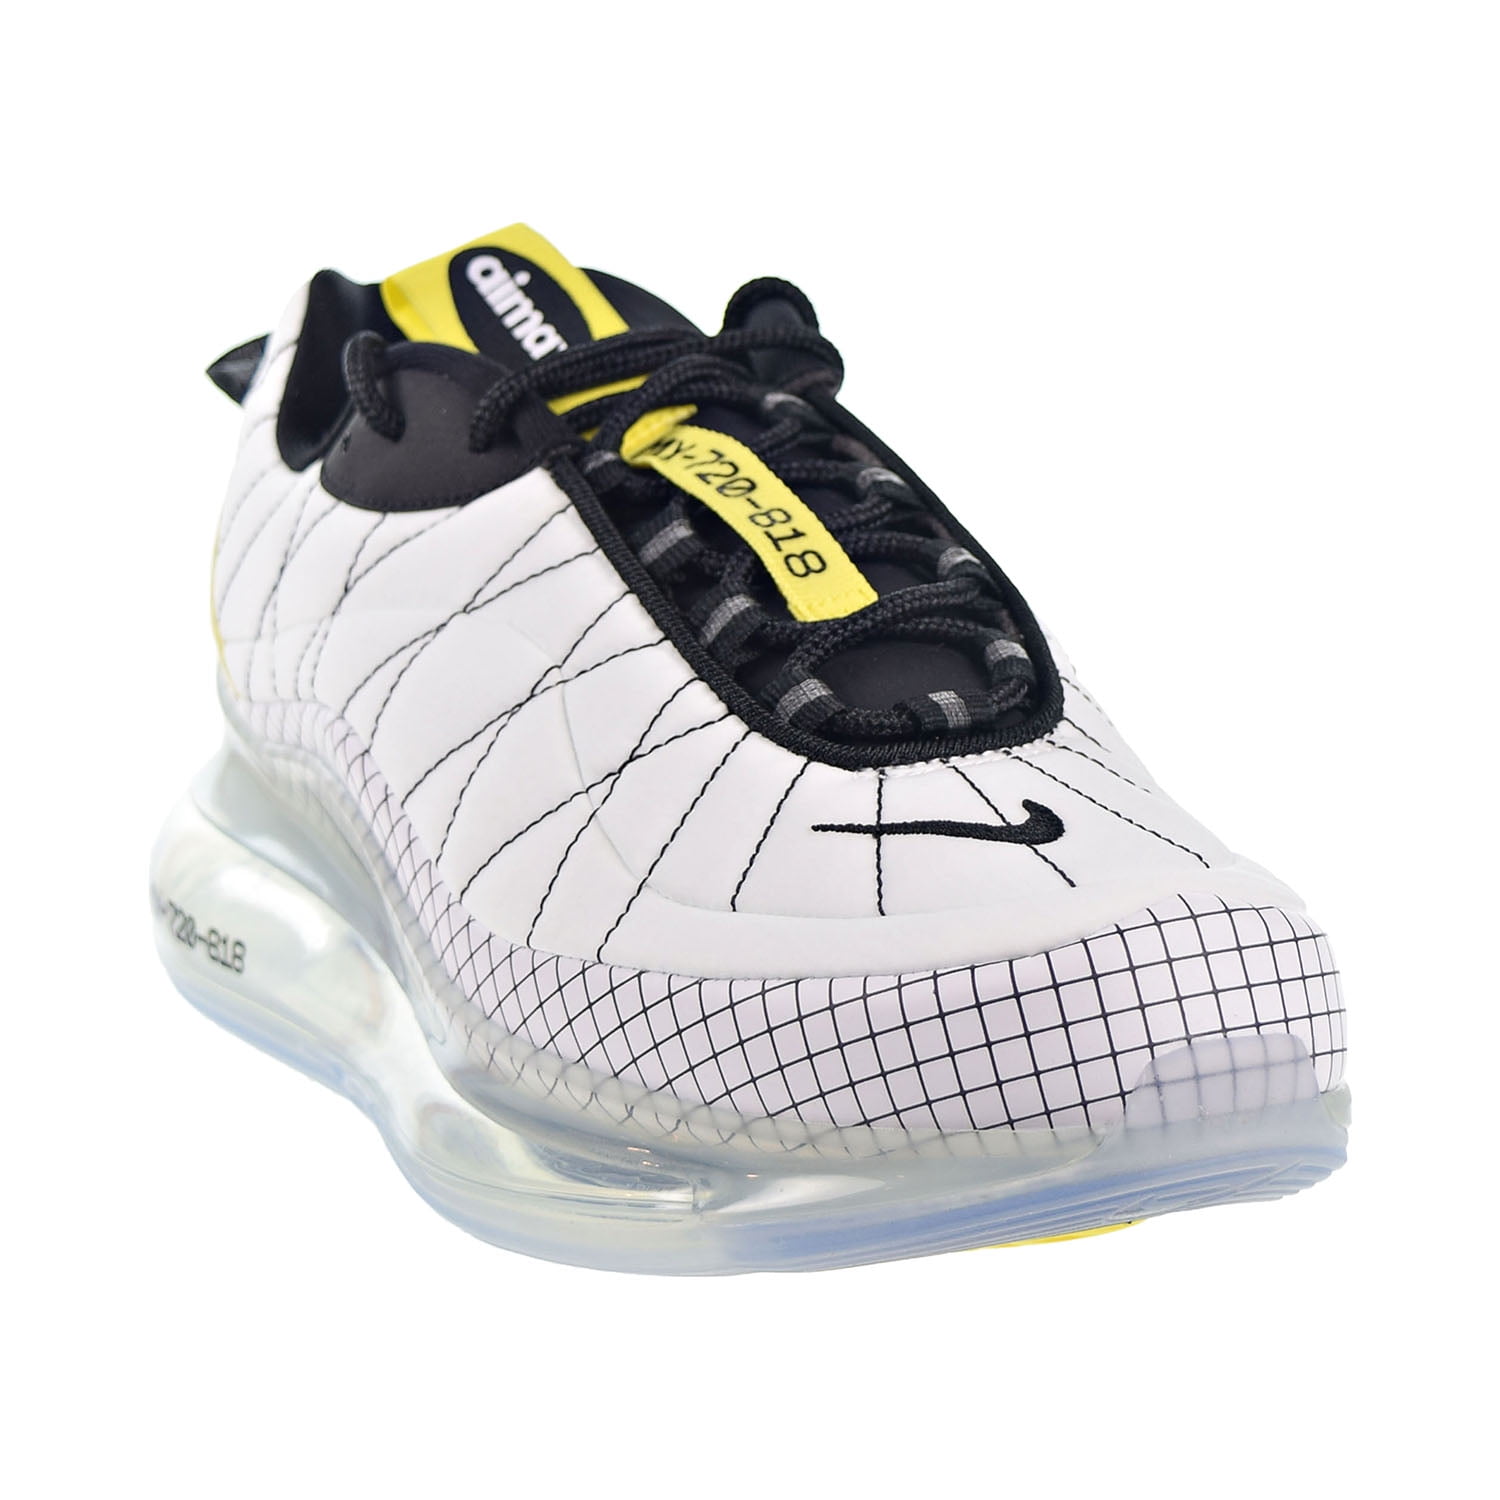 vold Jonglere blur Nike Air MX-720-818 Men's Shoes White-Opti Yellow-Black ci3871-100 -  Walmart.com